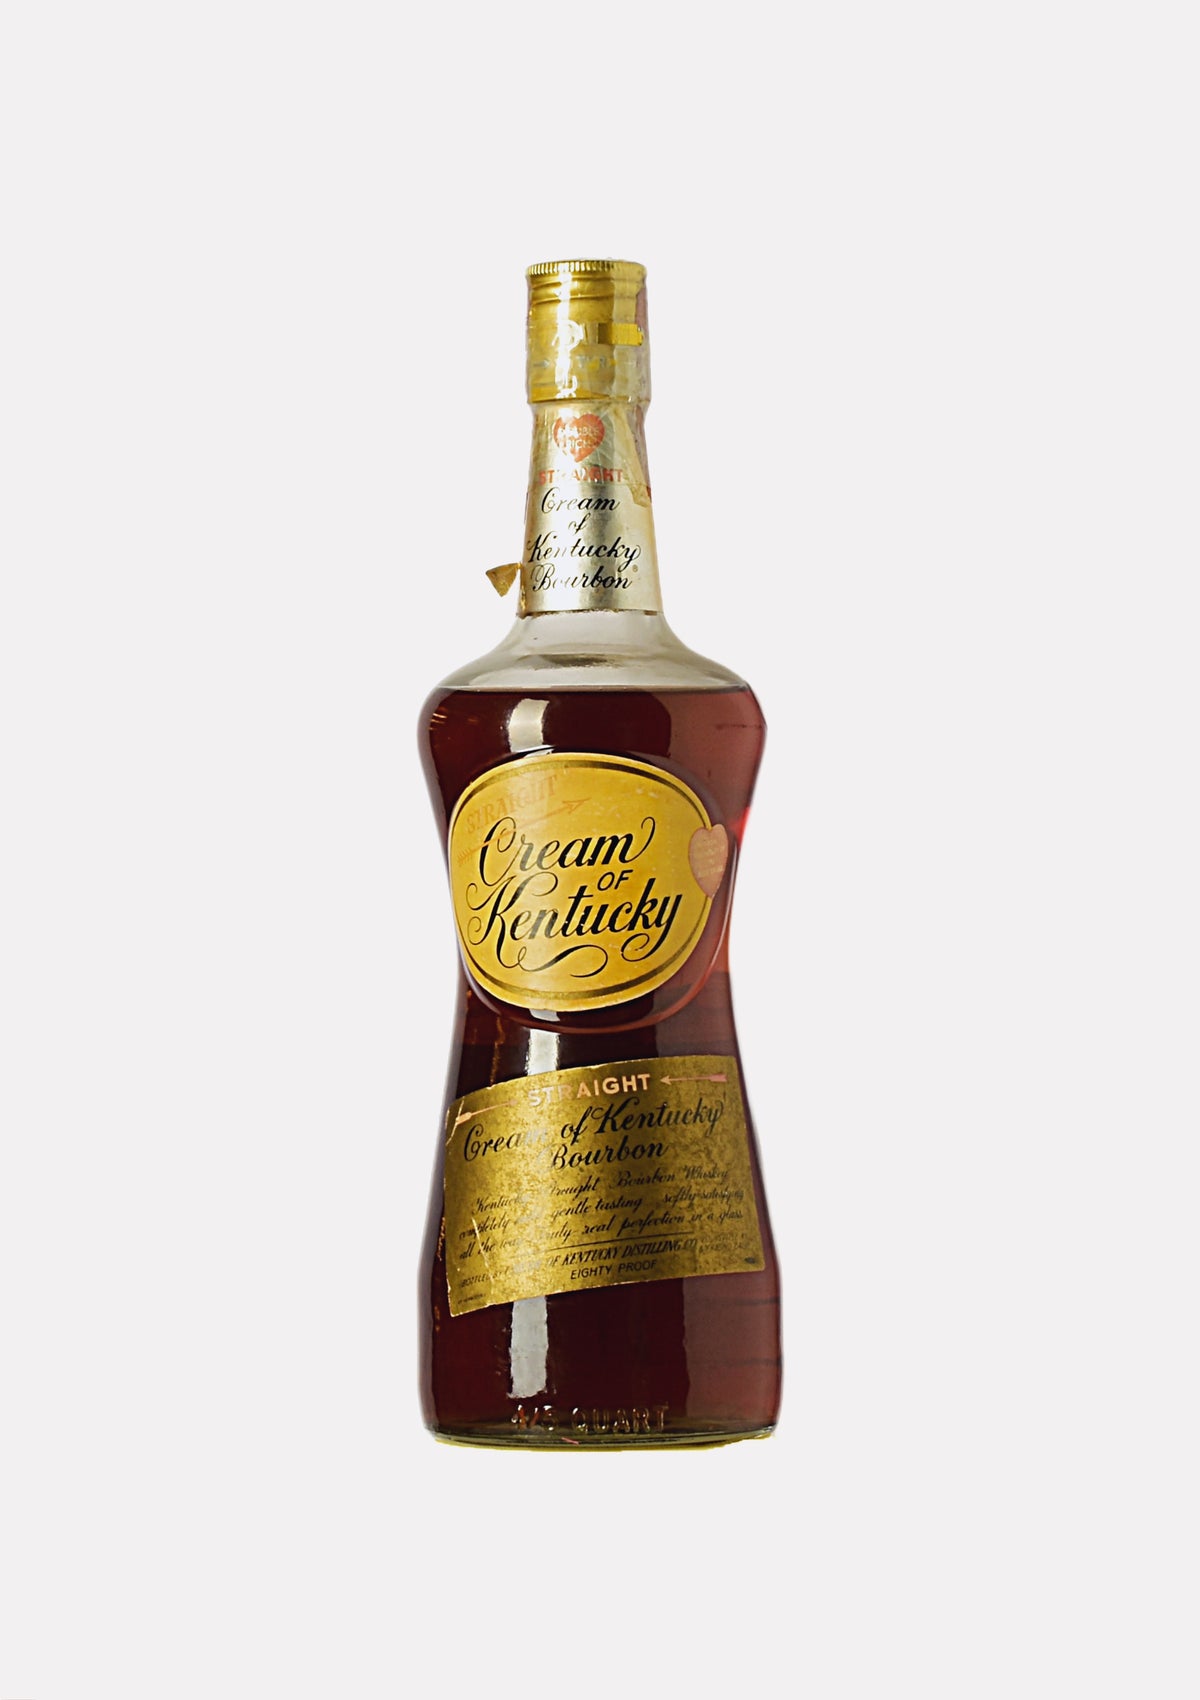 Cream of Kentucky Kentucky Straight Bourbon Whiskey